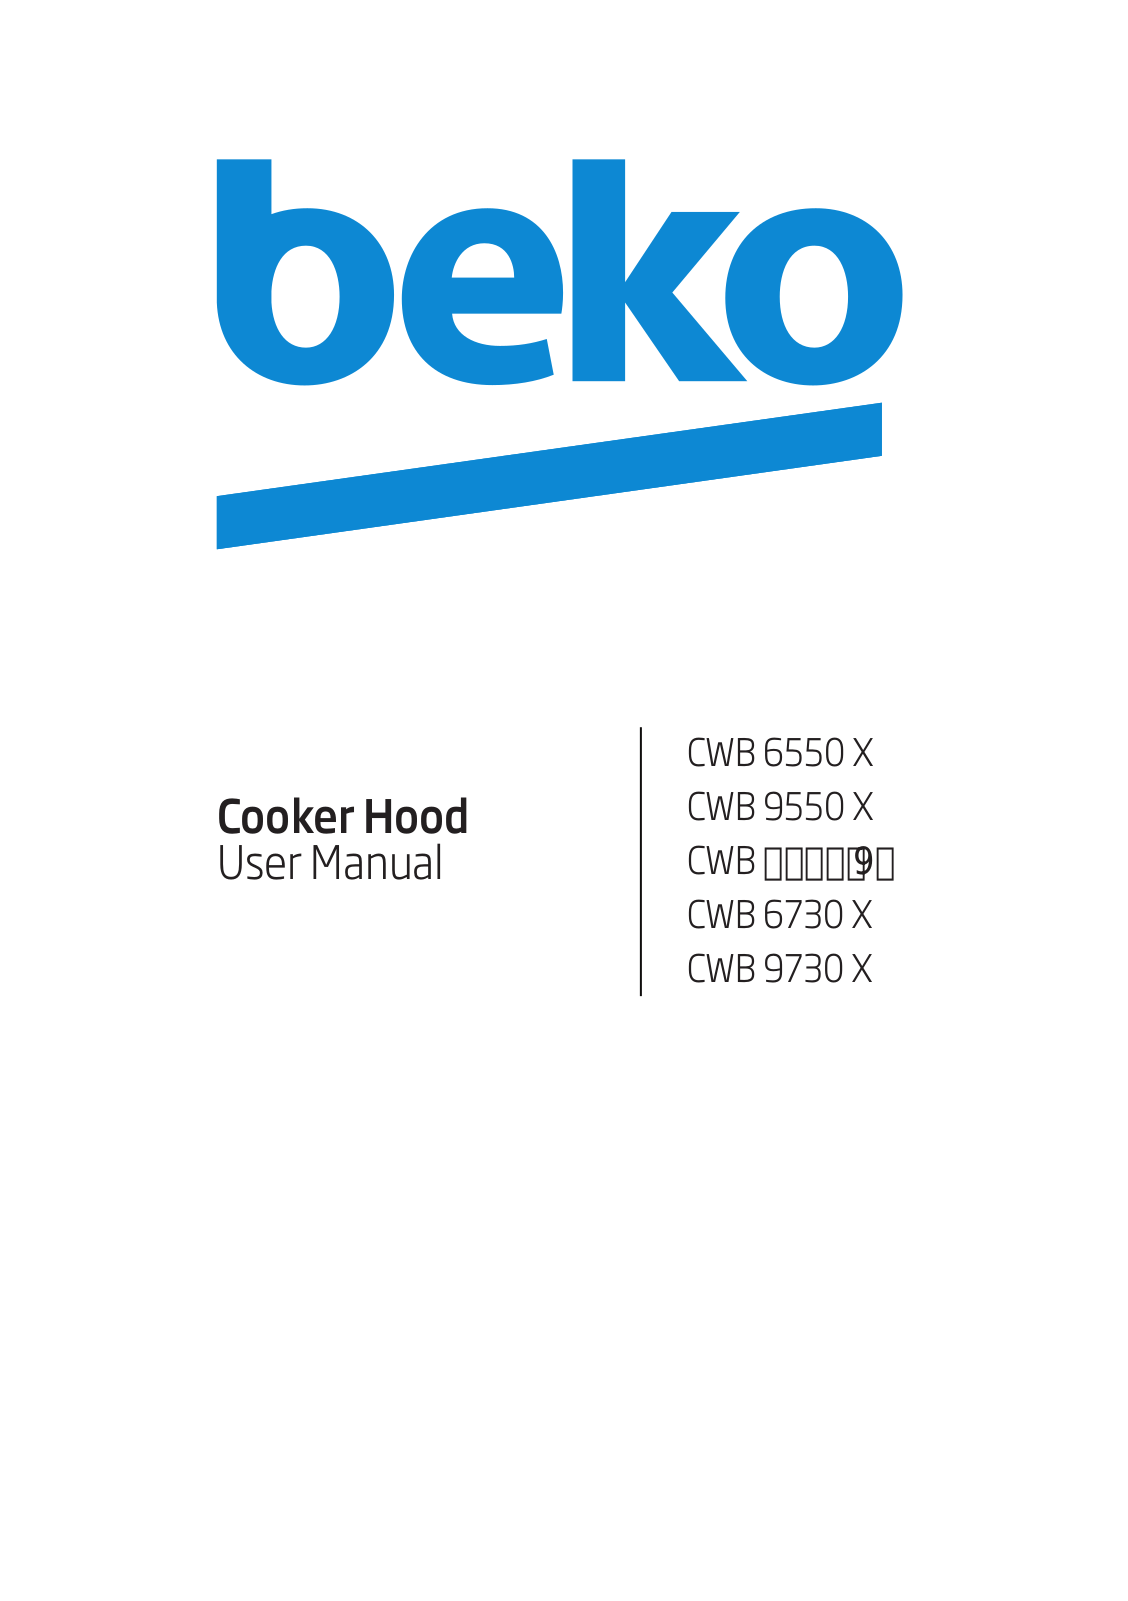 Beko CWB 6730 X User Manual